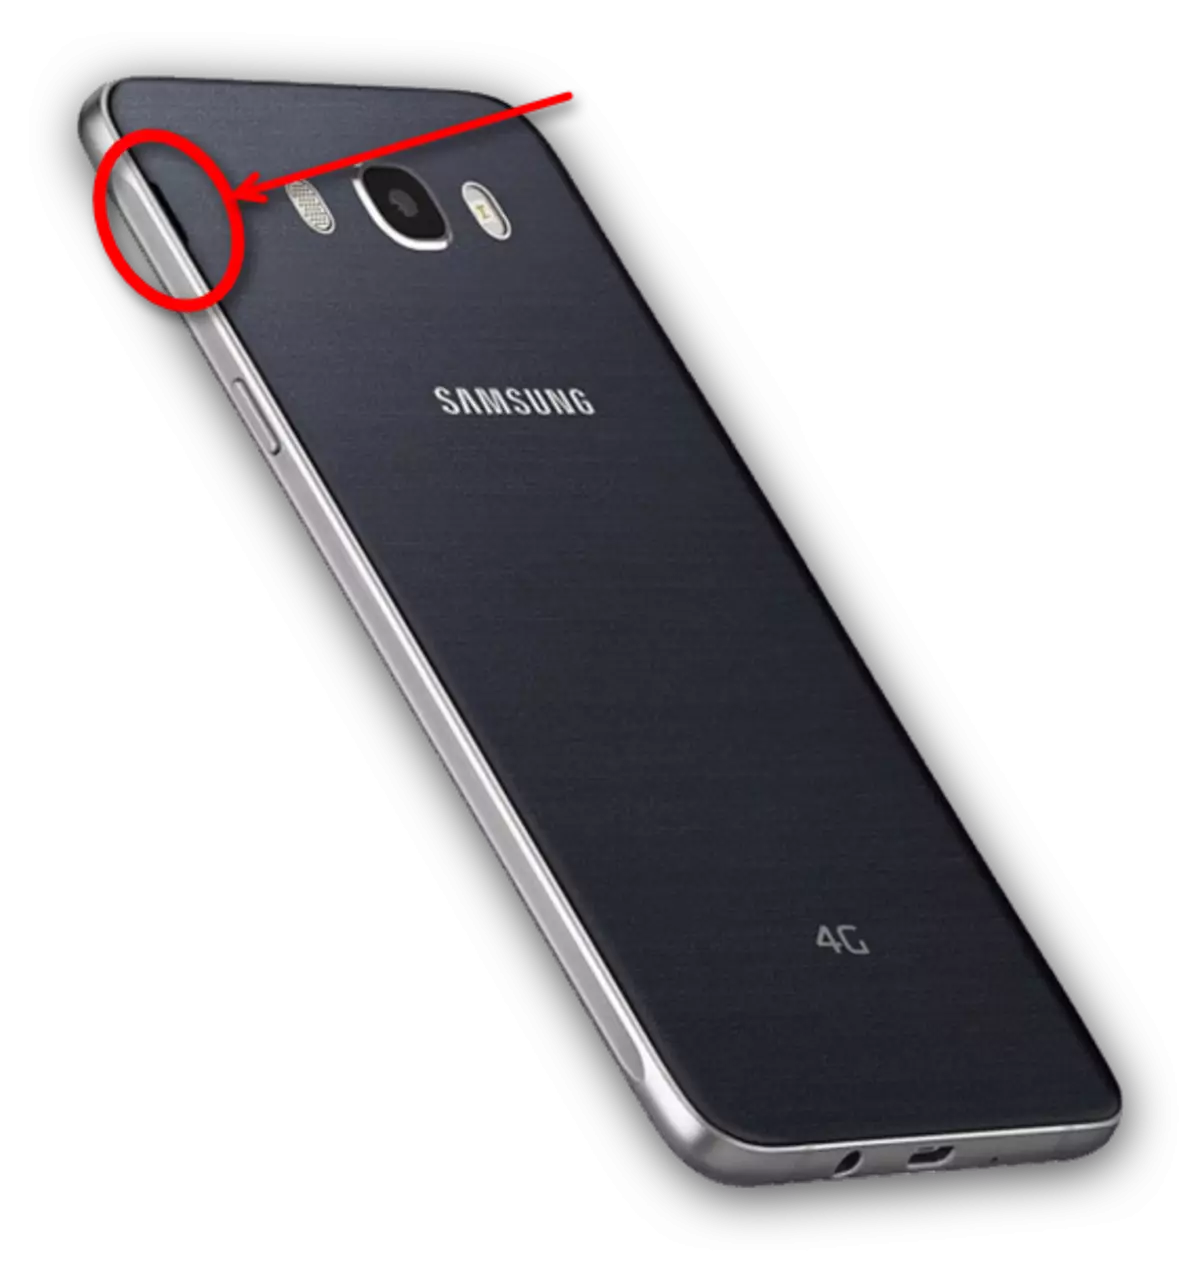 Samsung smartphone kufungua grooves.